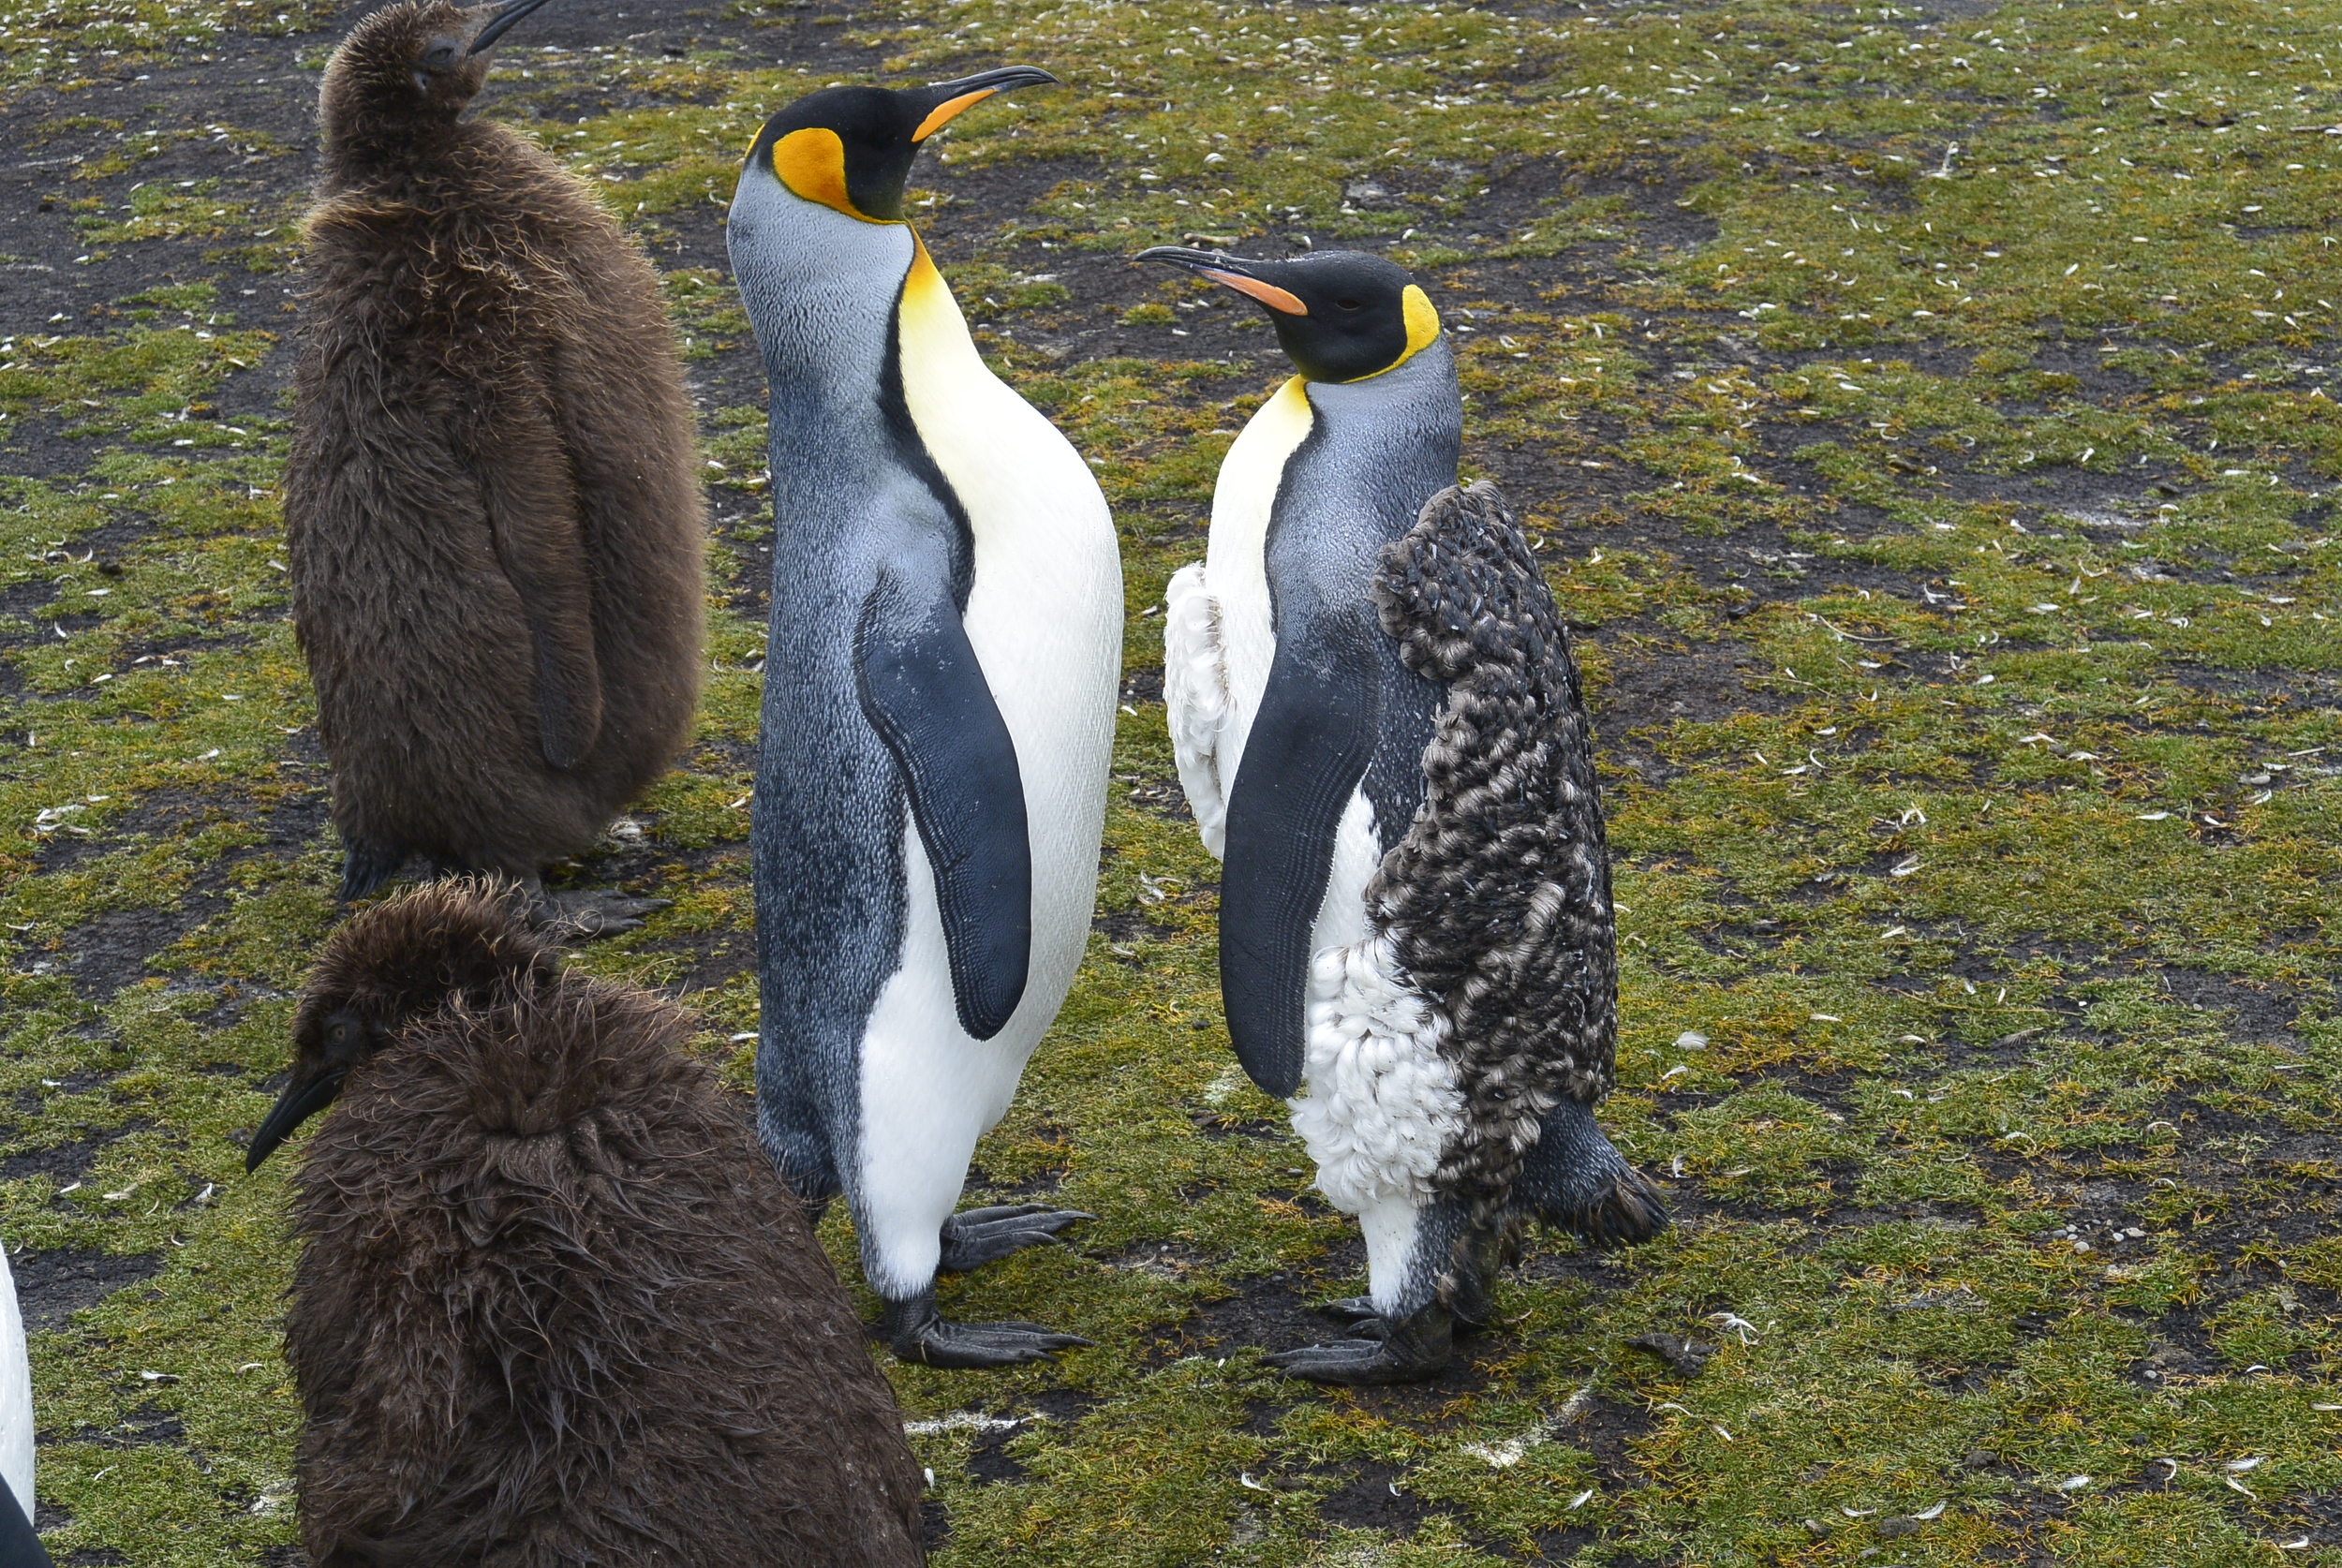 Falkland Islands Penguins